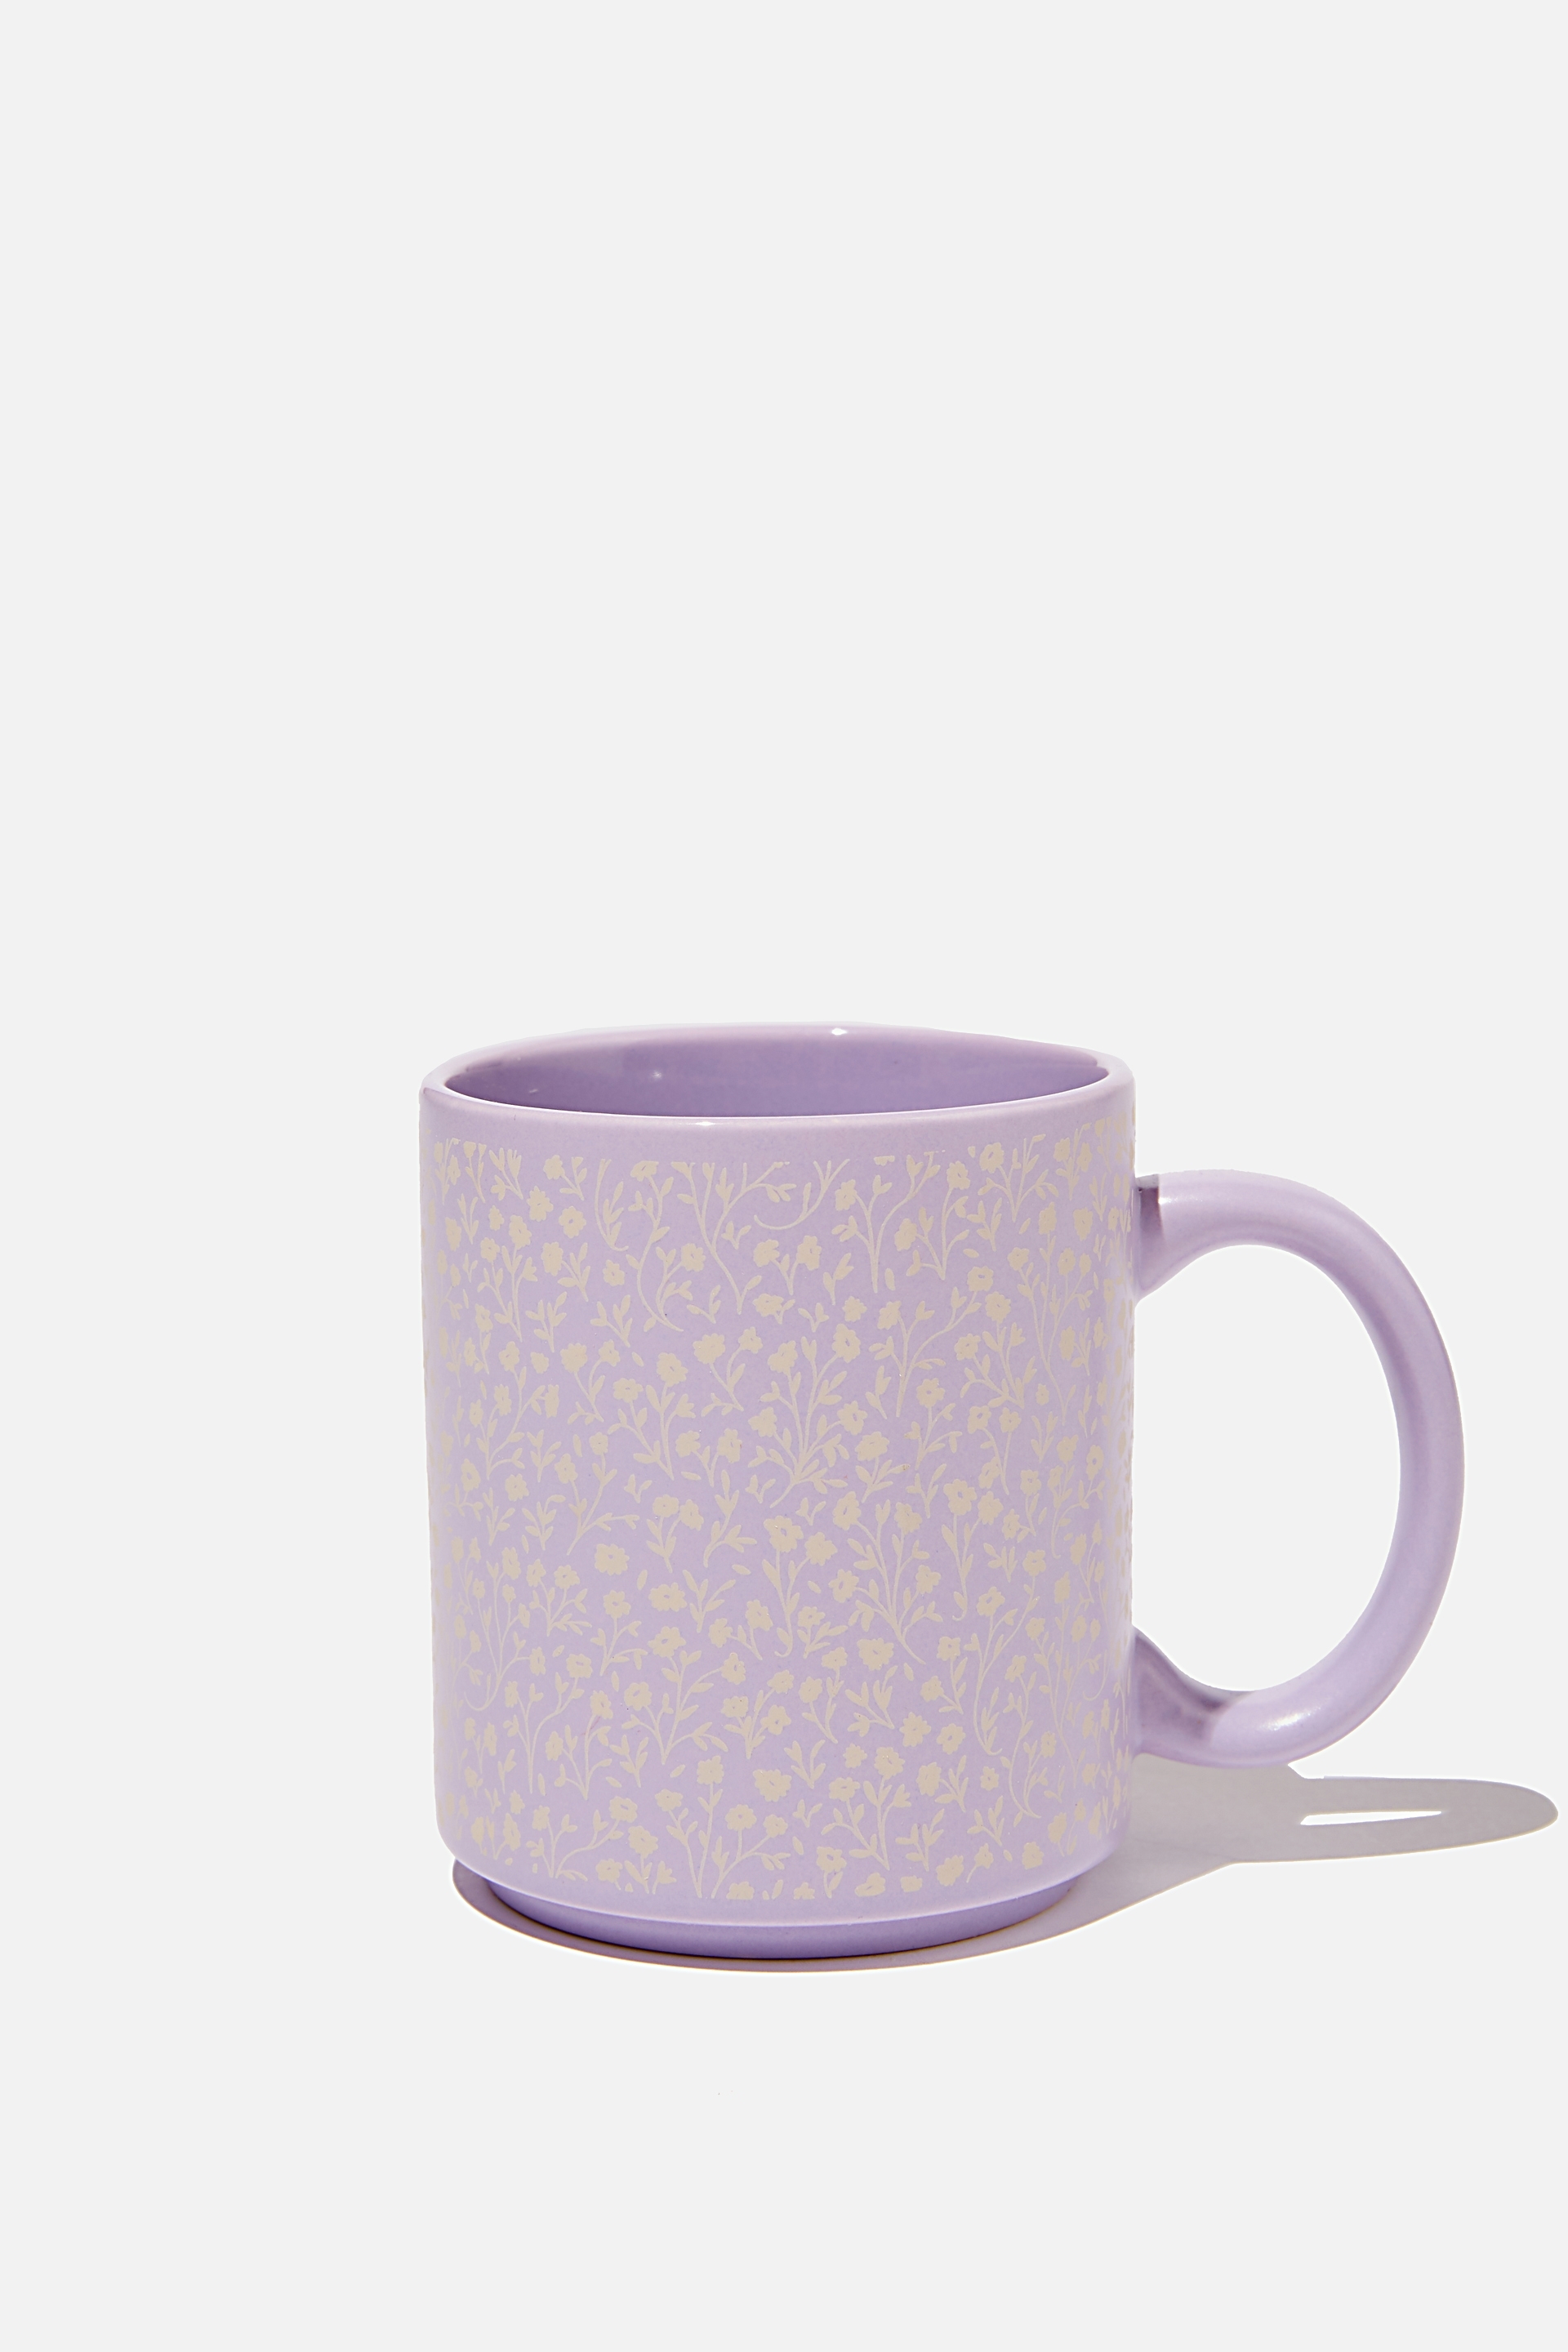 Typo - Daily Mug - Washed lilac meadow ditsy